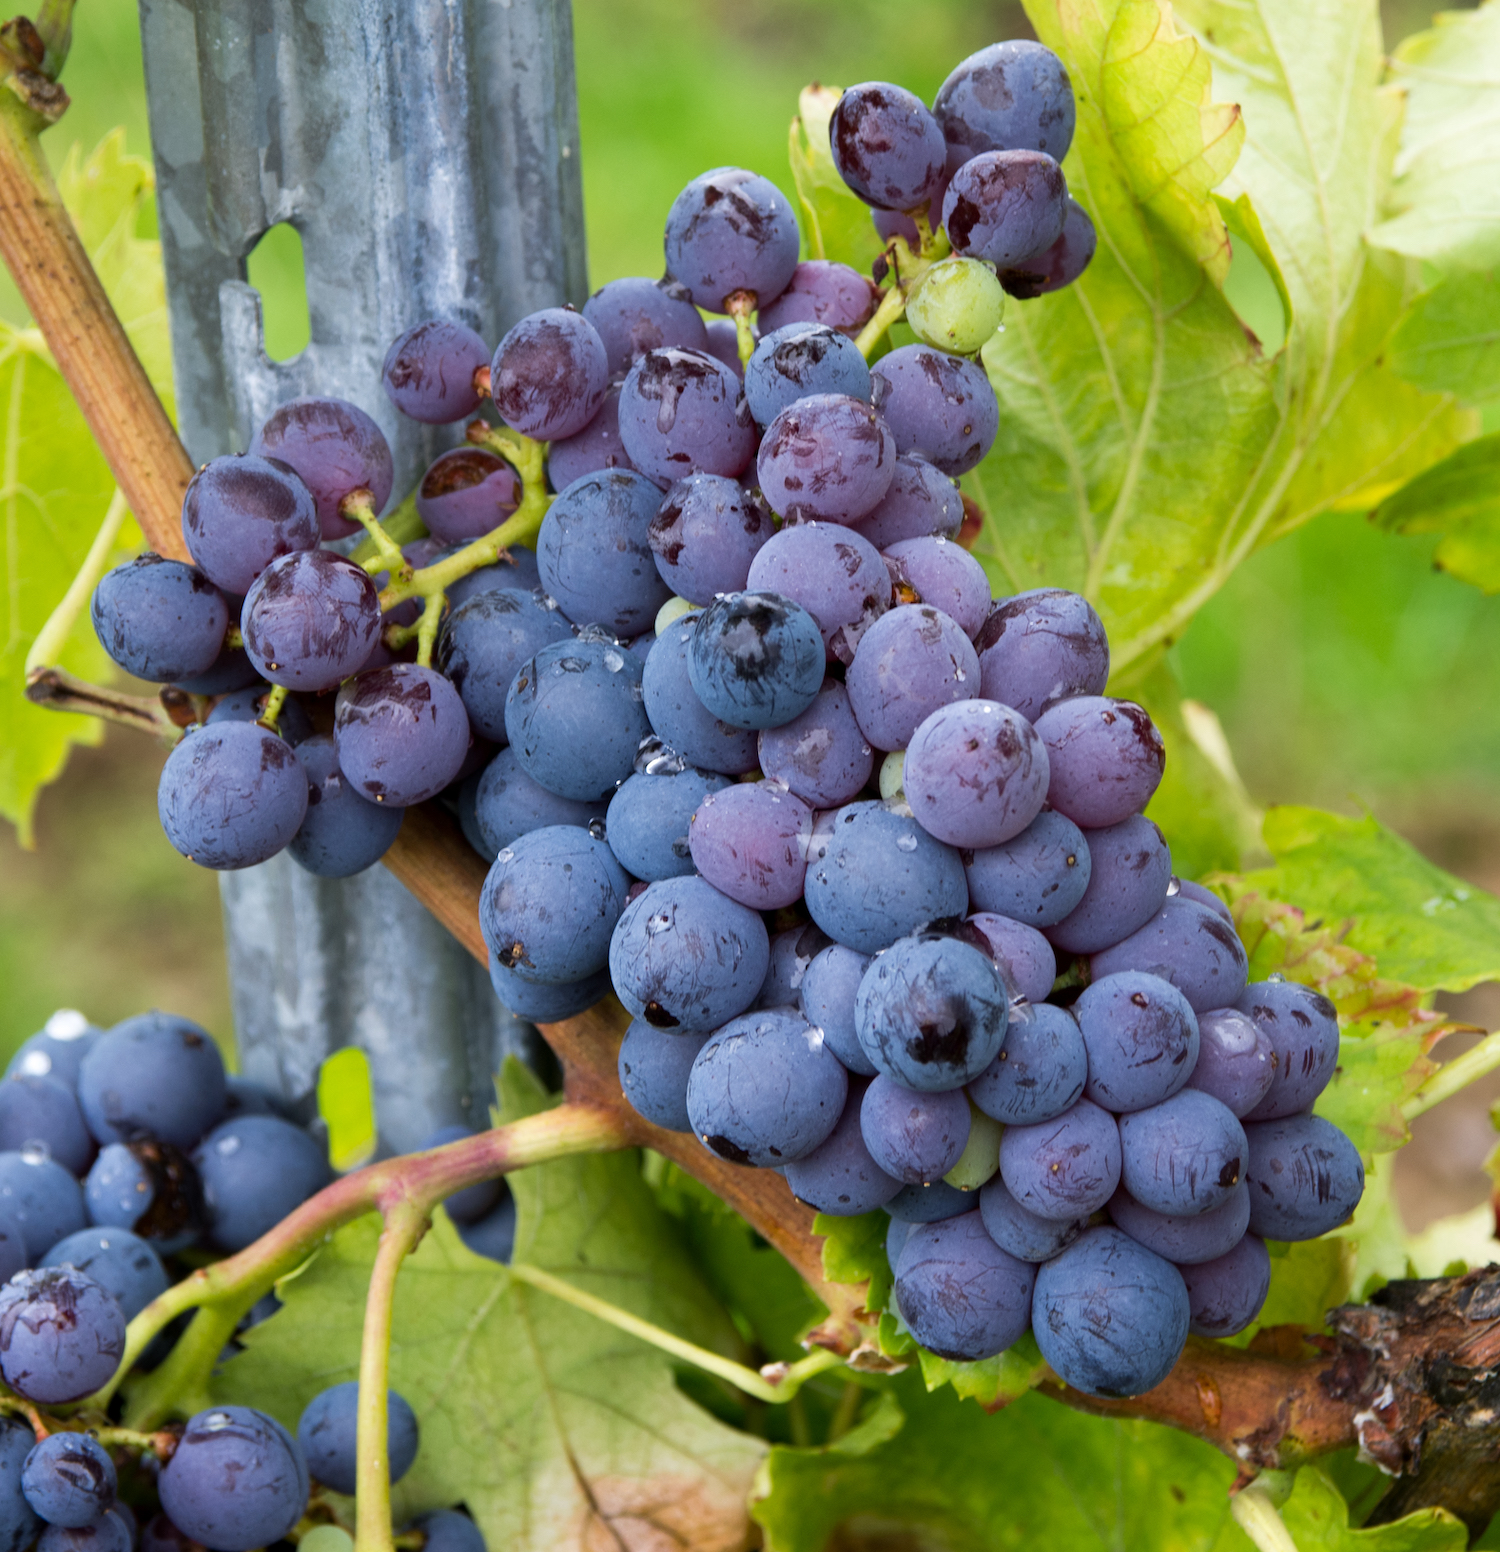 A Garnacha / Grenache grape on the vine